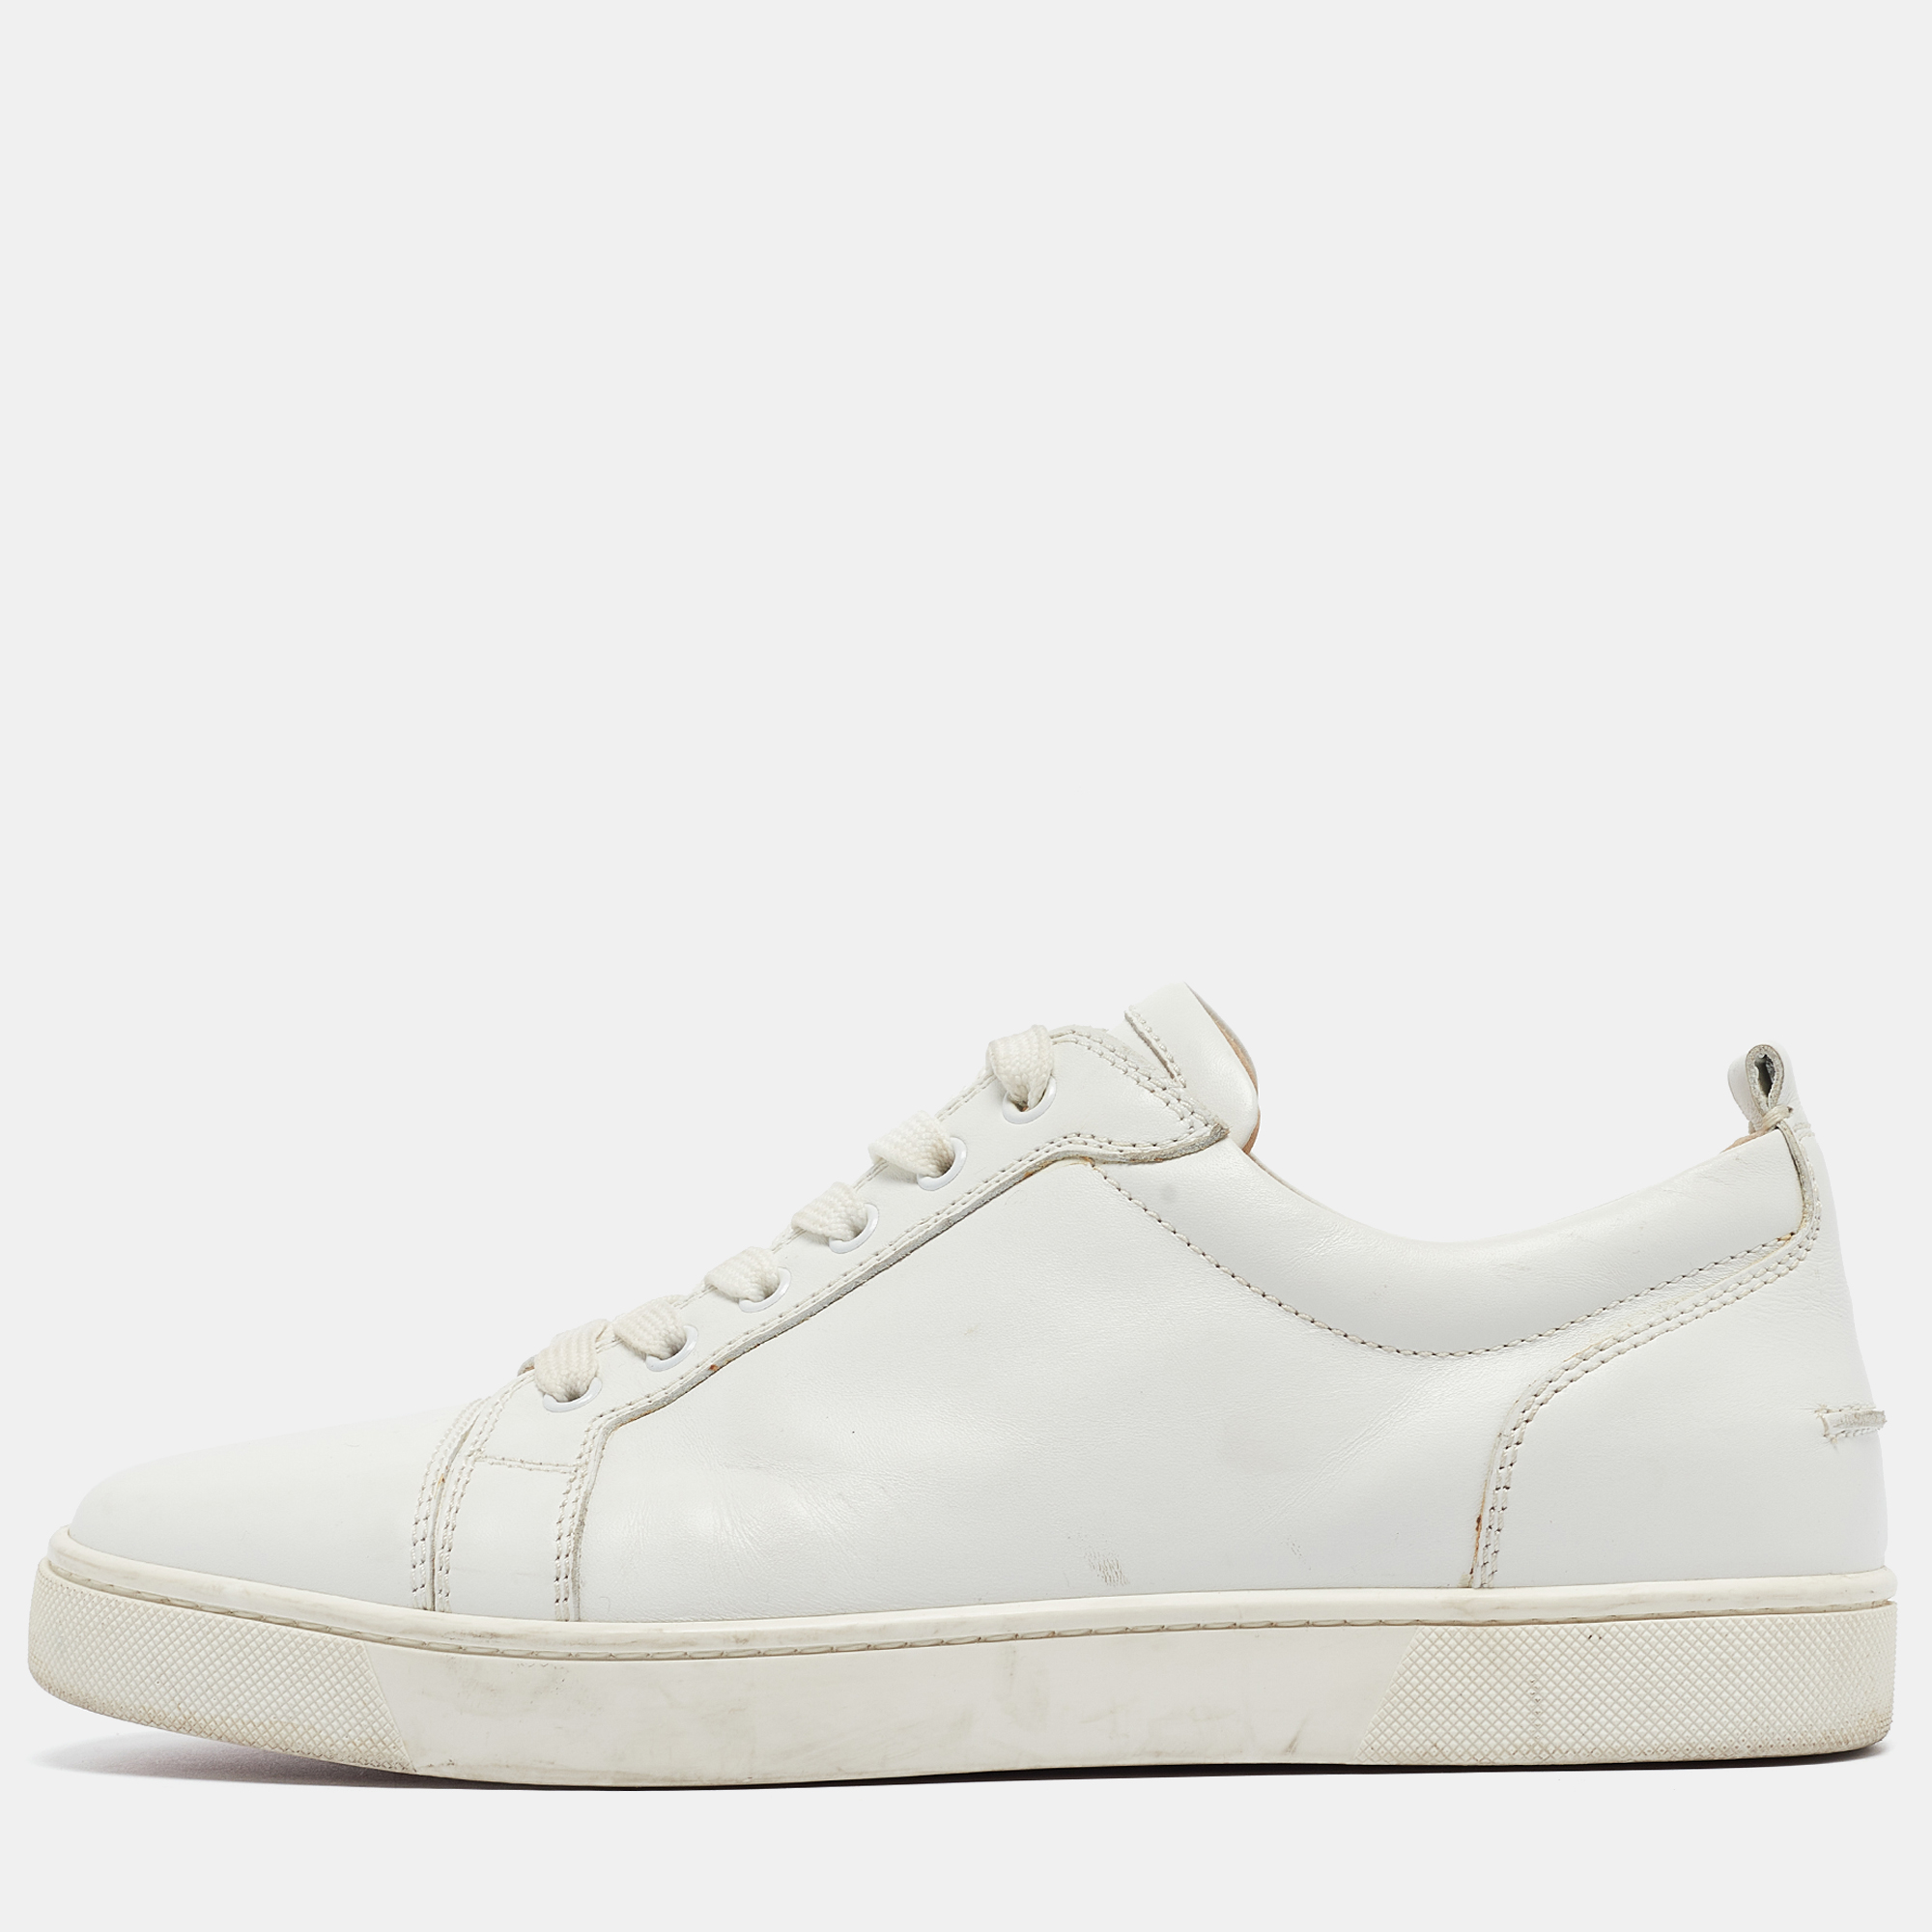 Christian louboutin white leather louis junior sneakers size 43